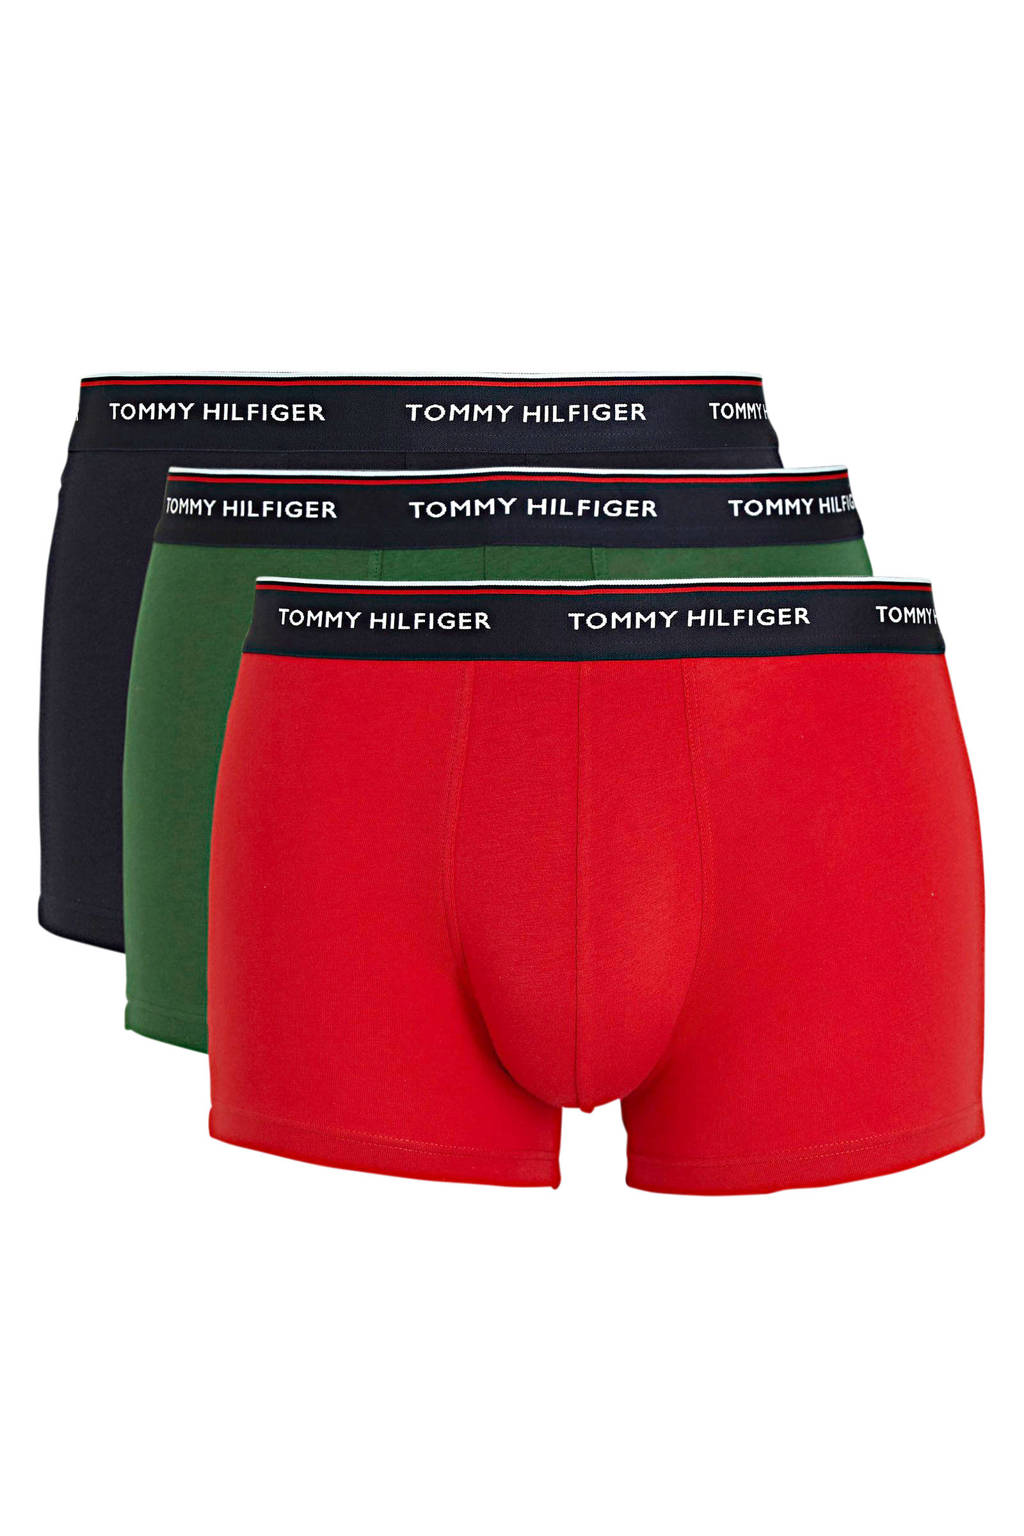 Tommy Hilfiger boxershort (set van 3), Rood/groen/donkerblauw